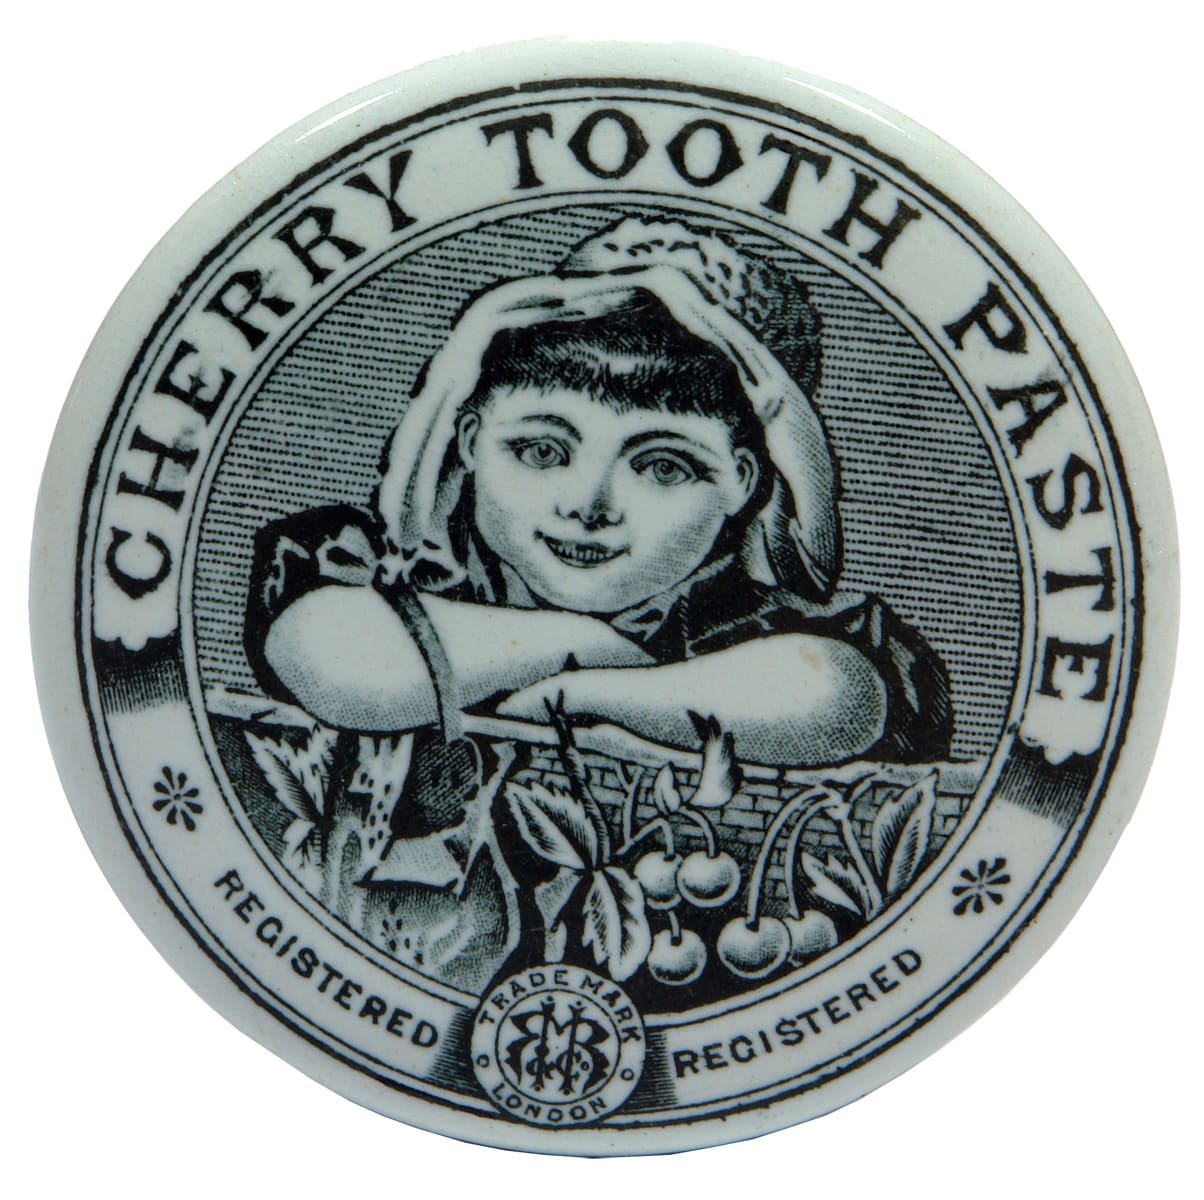 Cherry Tooth Paste Girl Cherries Pot Lid